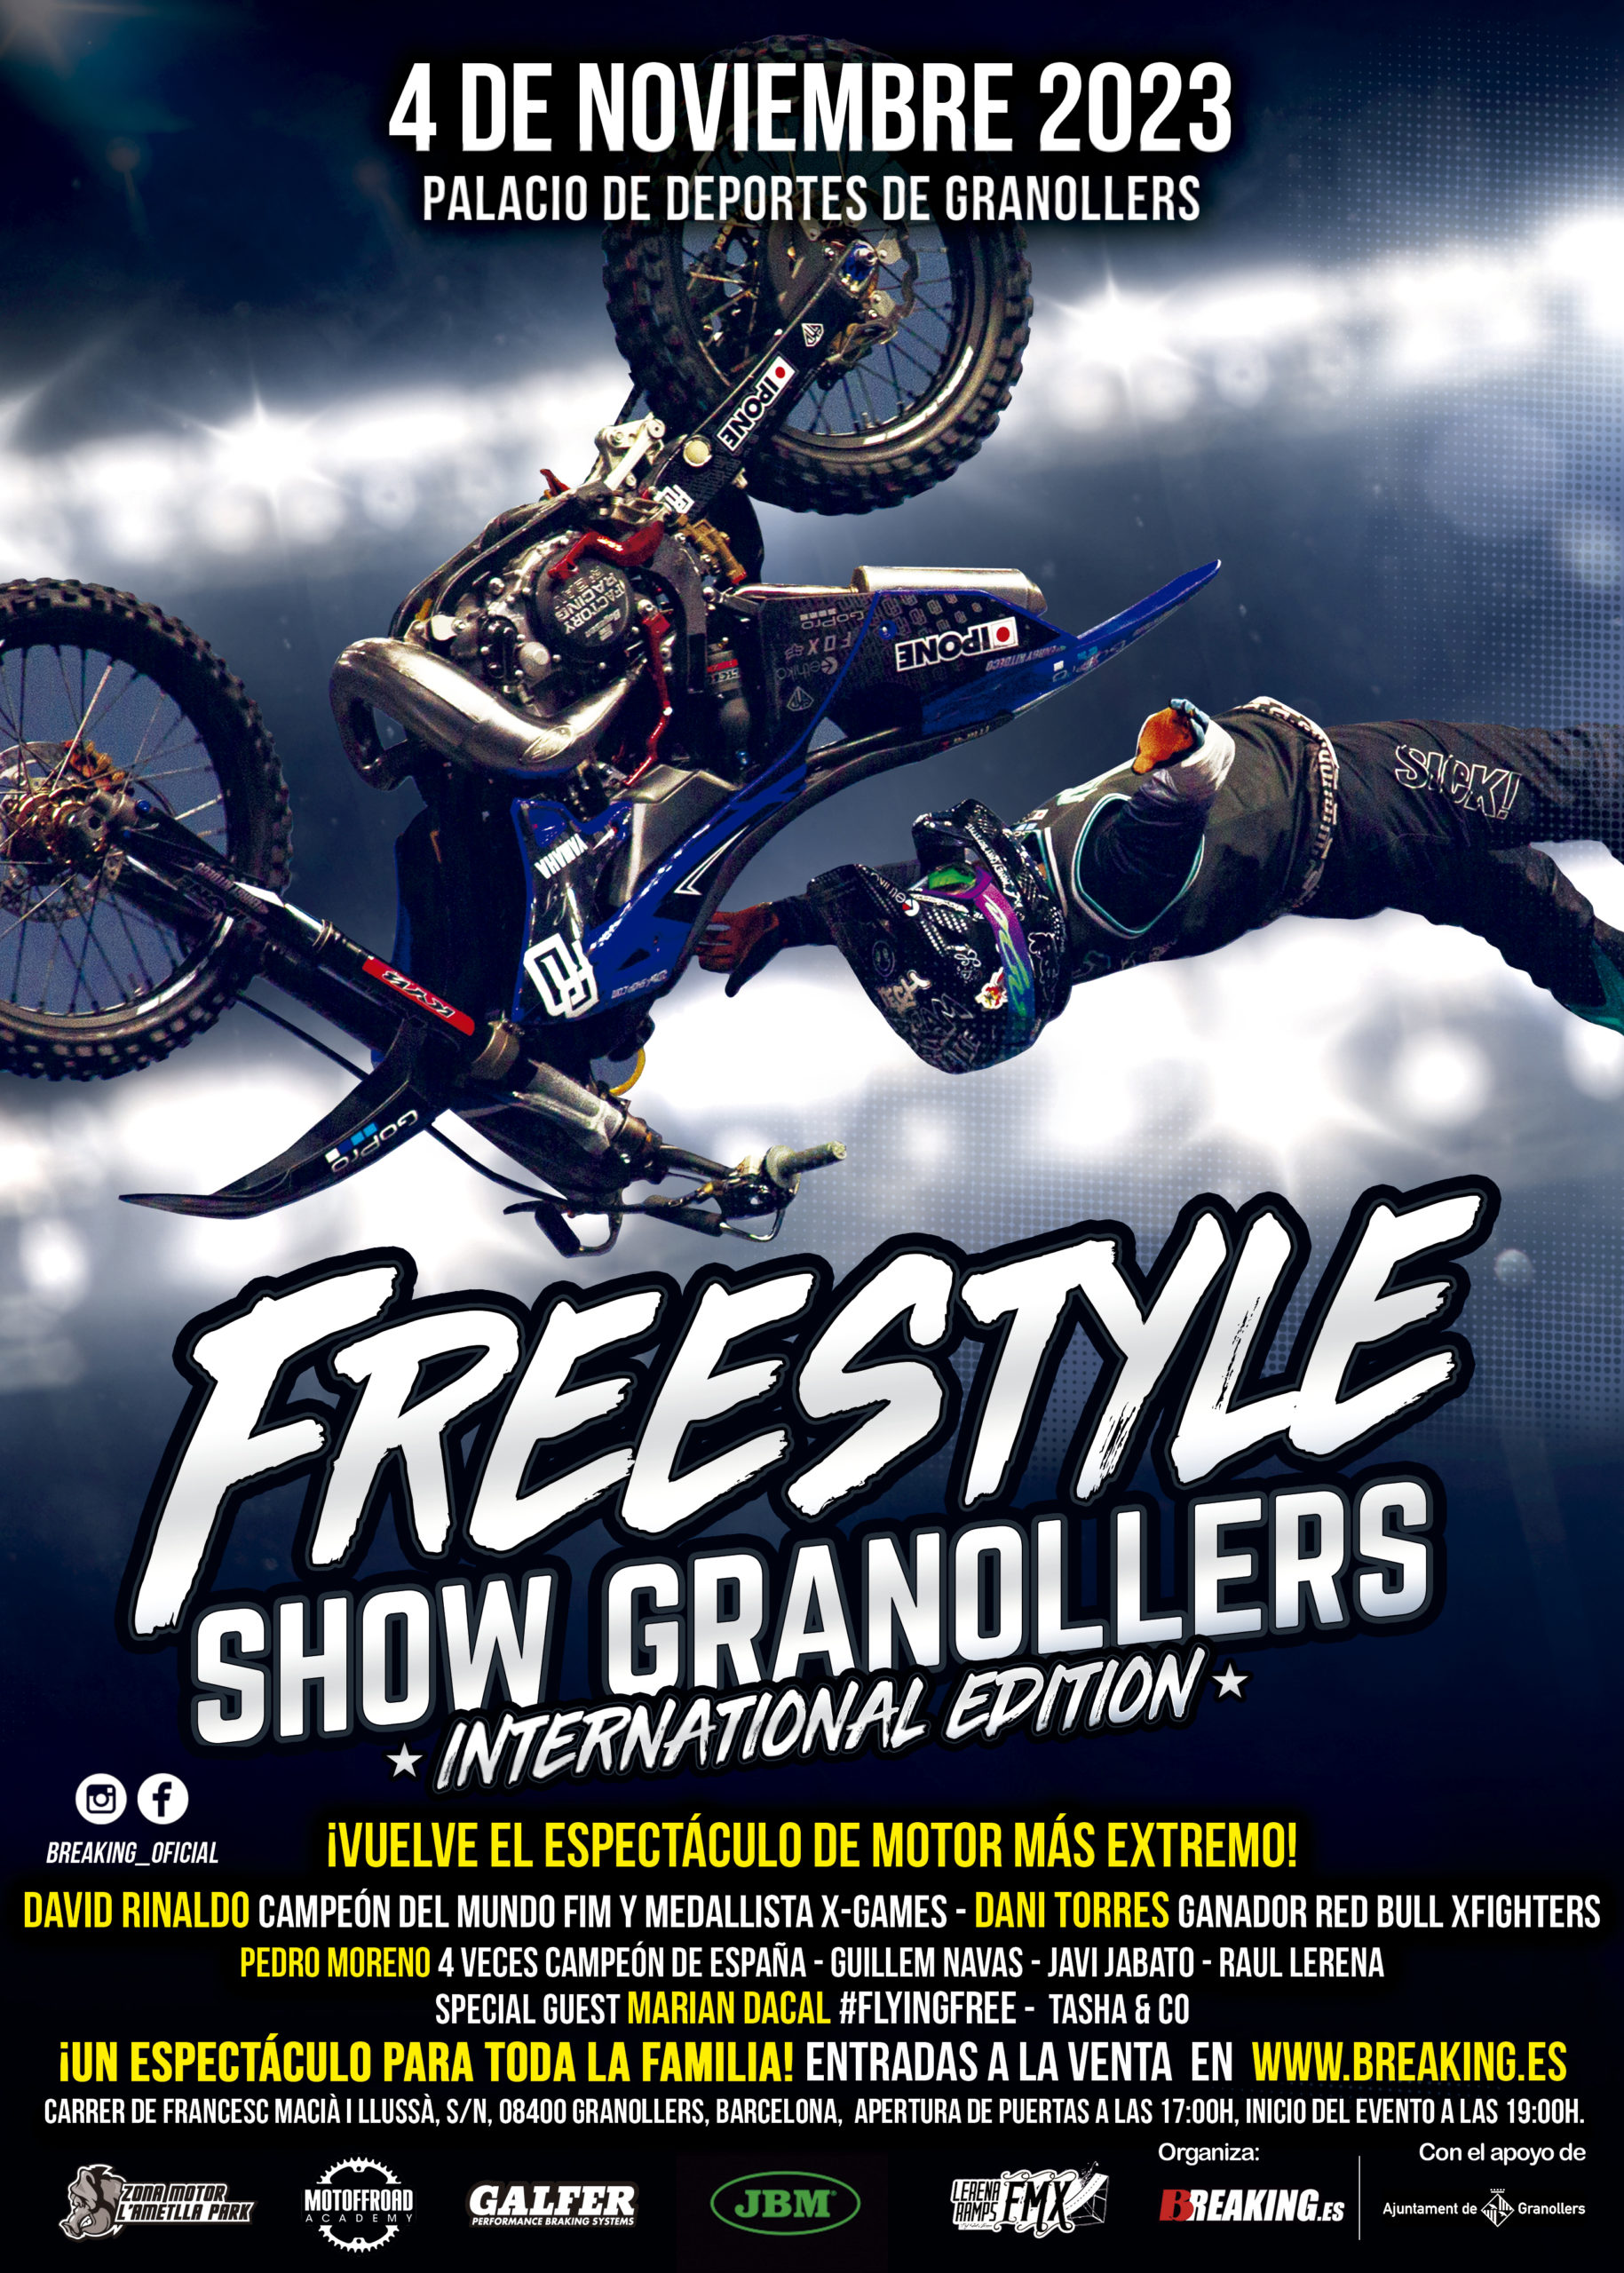 El Freestyle show vuelve a Granollers